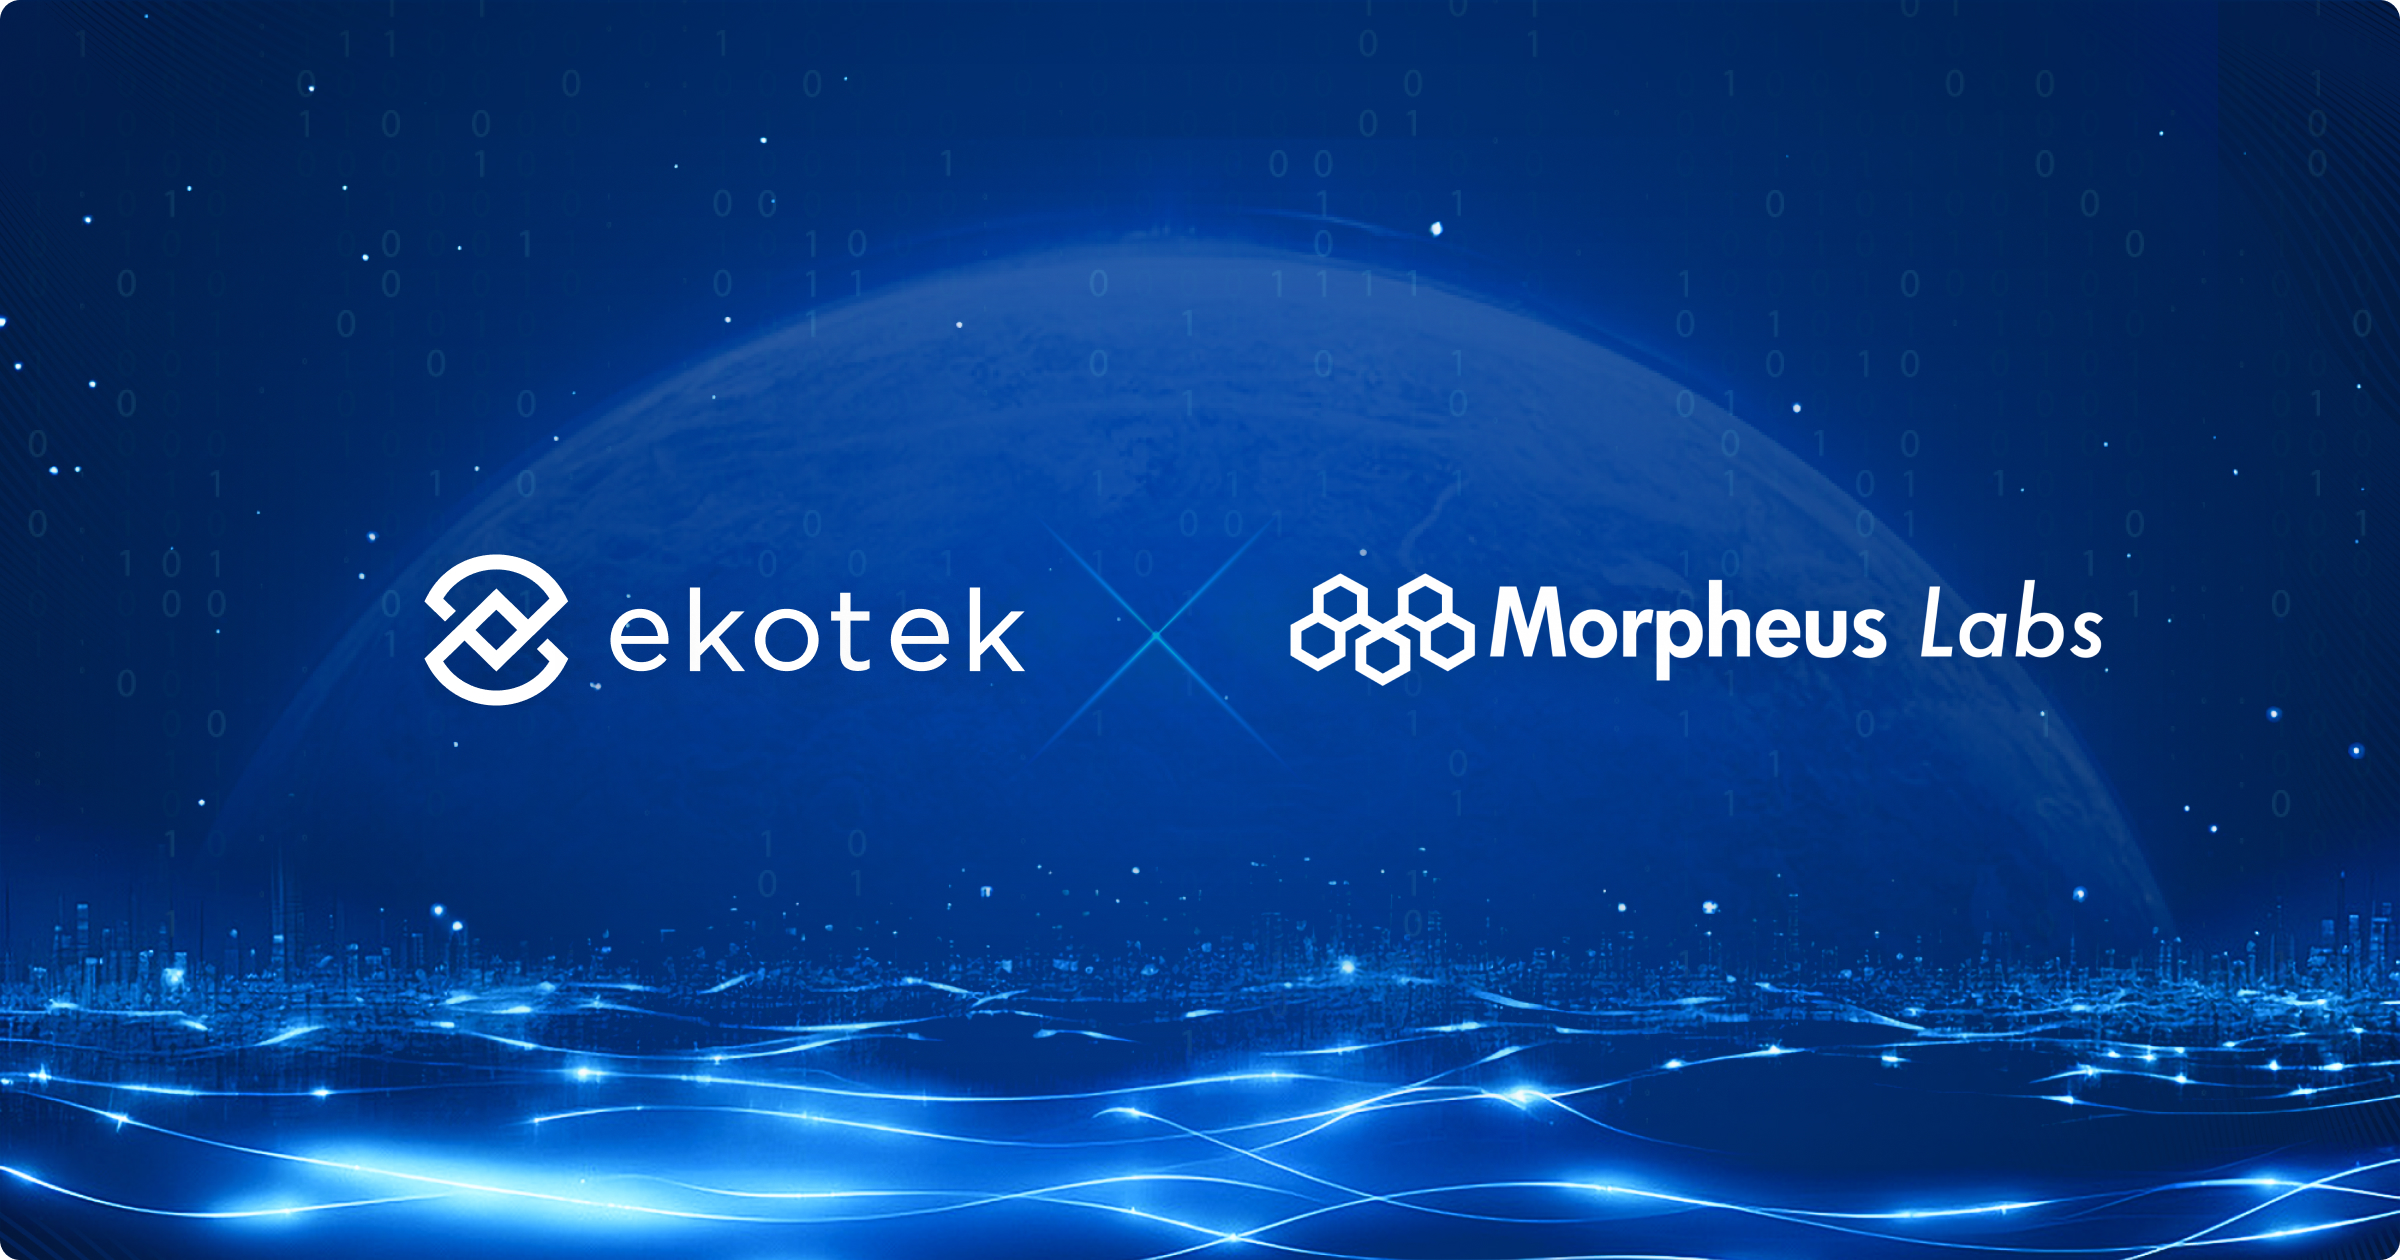 Ekotek and Morpheus Labs forge strategic partnership in blockchain and AI